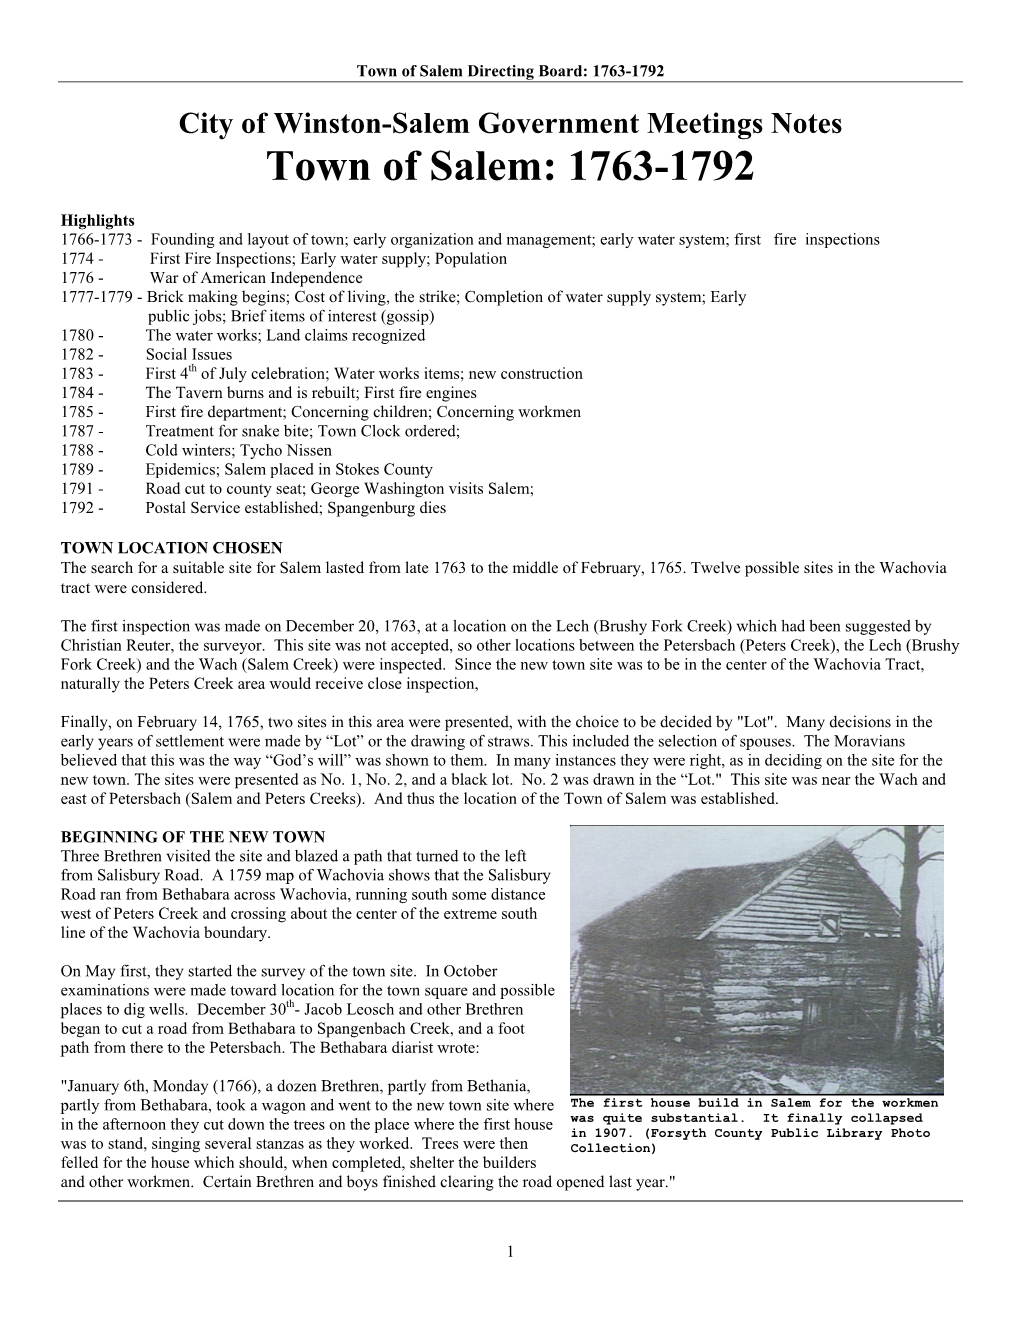 Town of Salem: 1763-1792